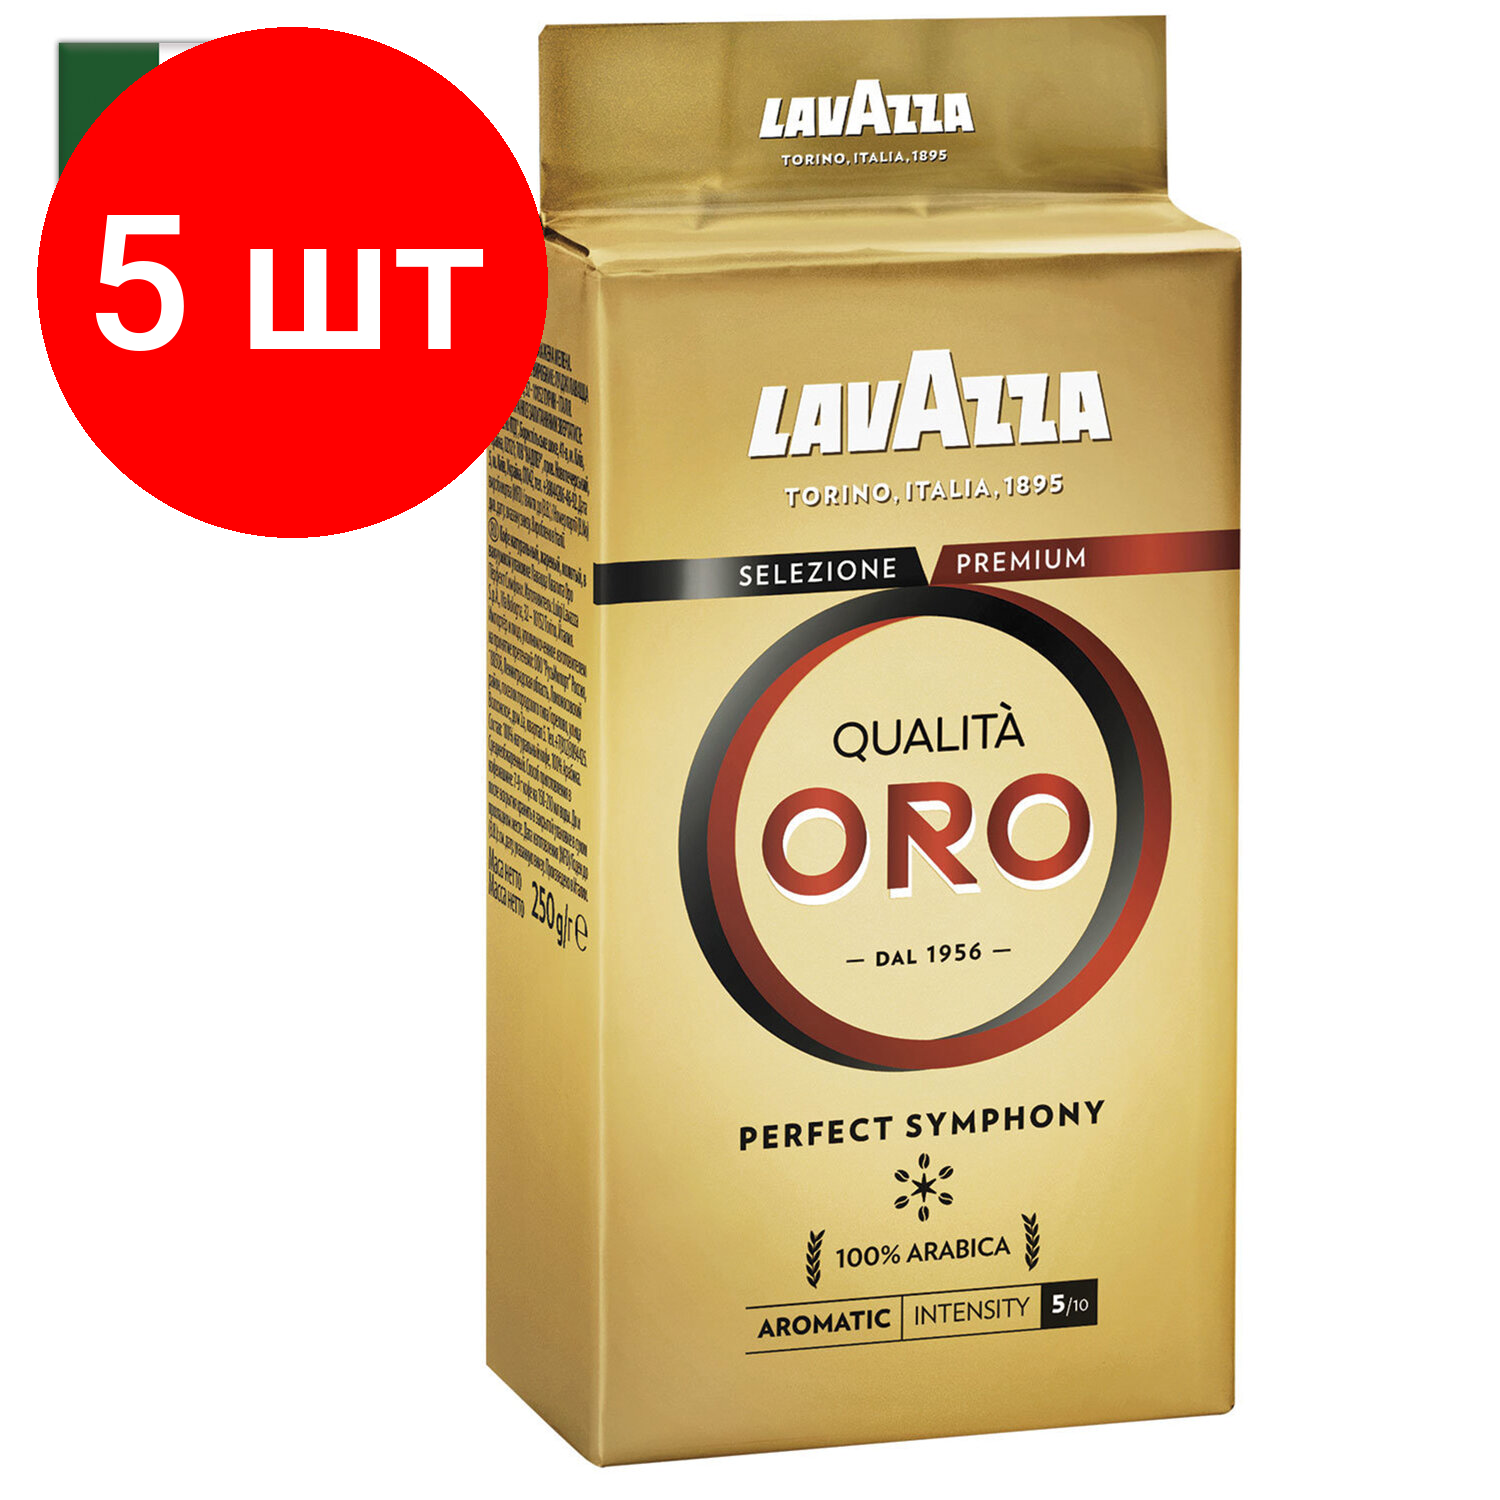 Комплект 5 шт, Кофе молотый LAVAZZA "Qualita Oro", арабика 100%, 250 г, вакуумная упаковка, 1991